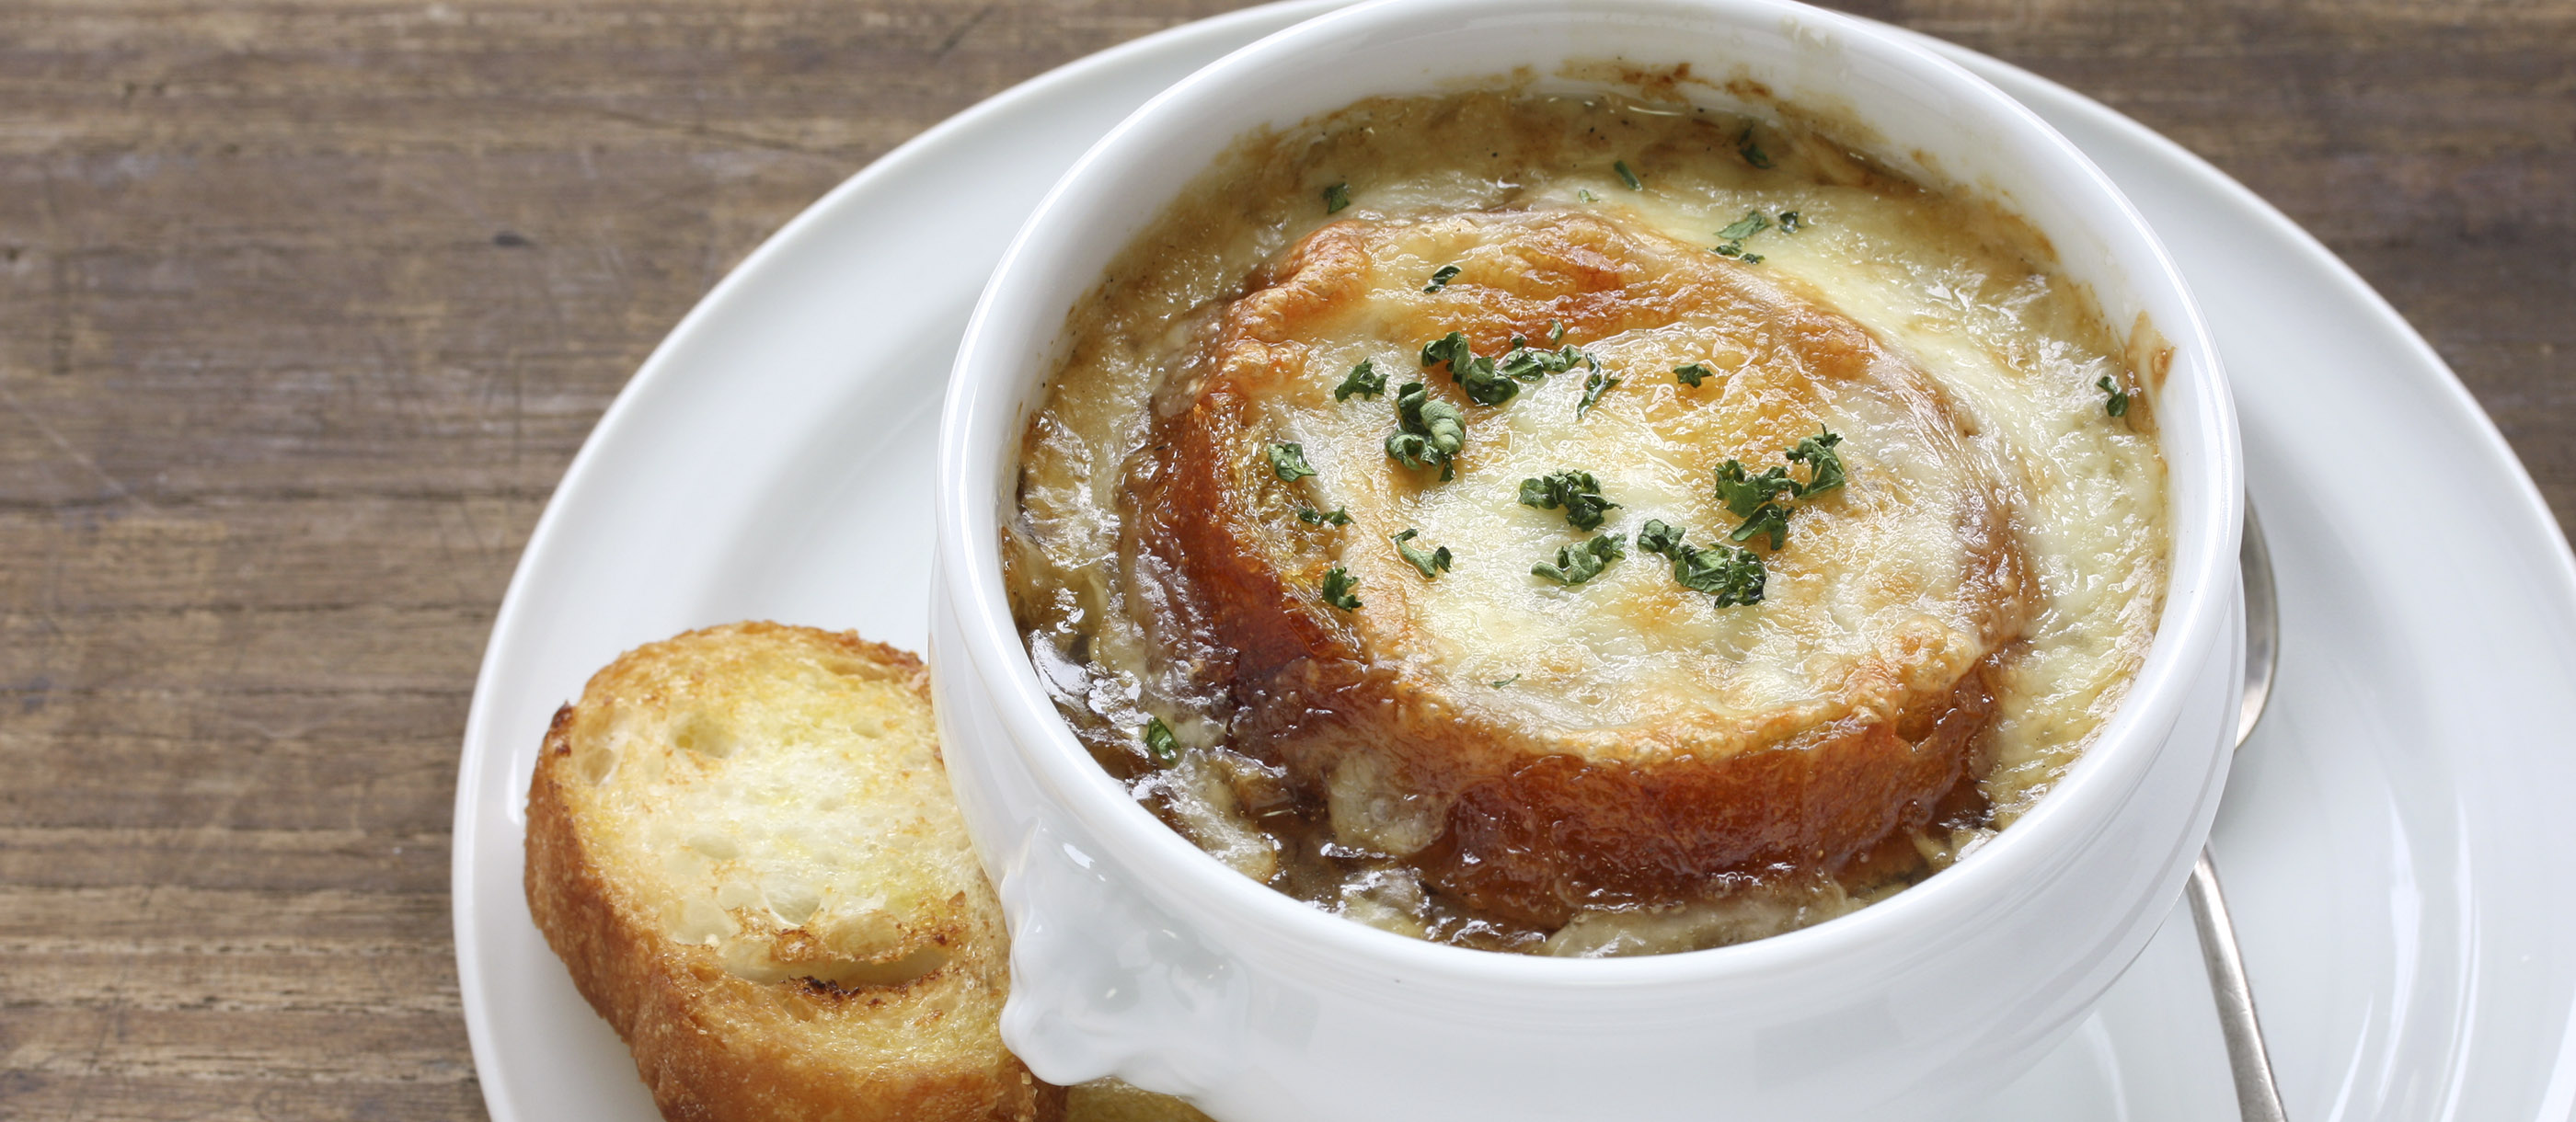 Soupe à L'oignon Authentic Recipe | TasteAtlas